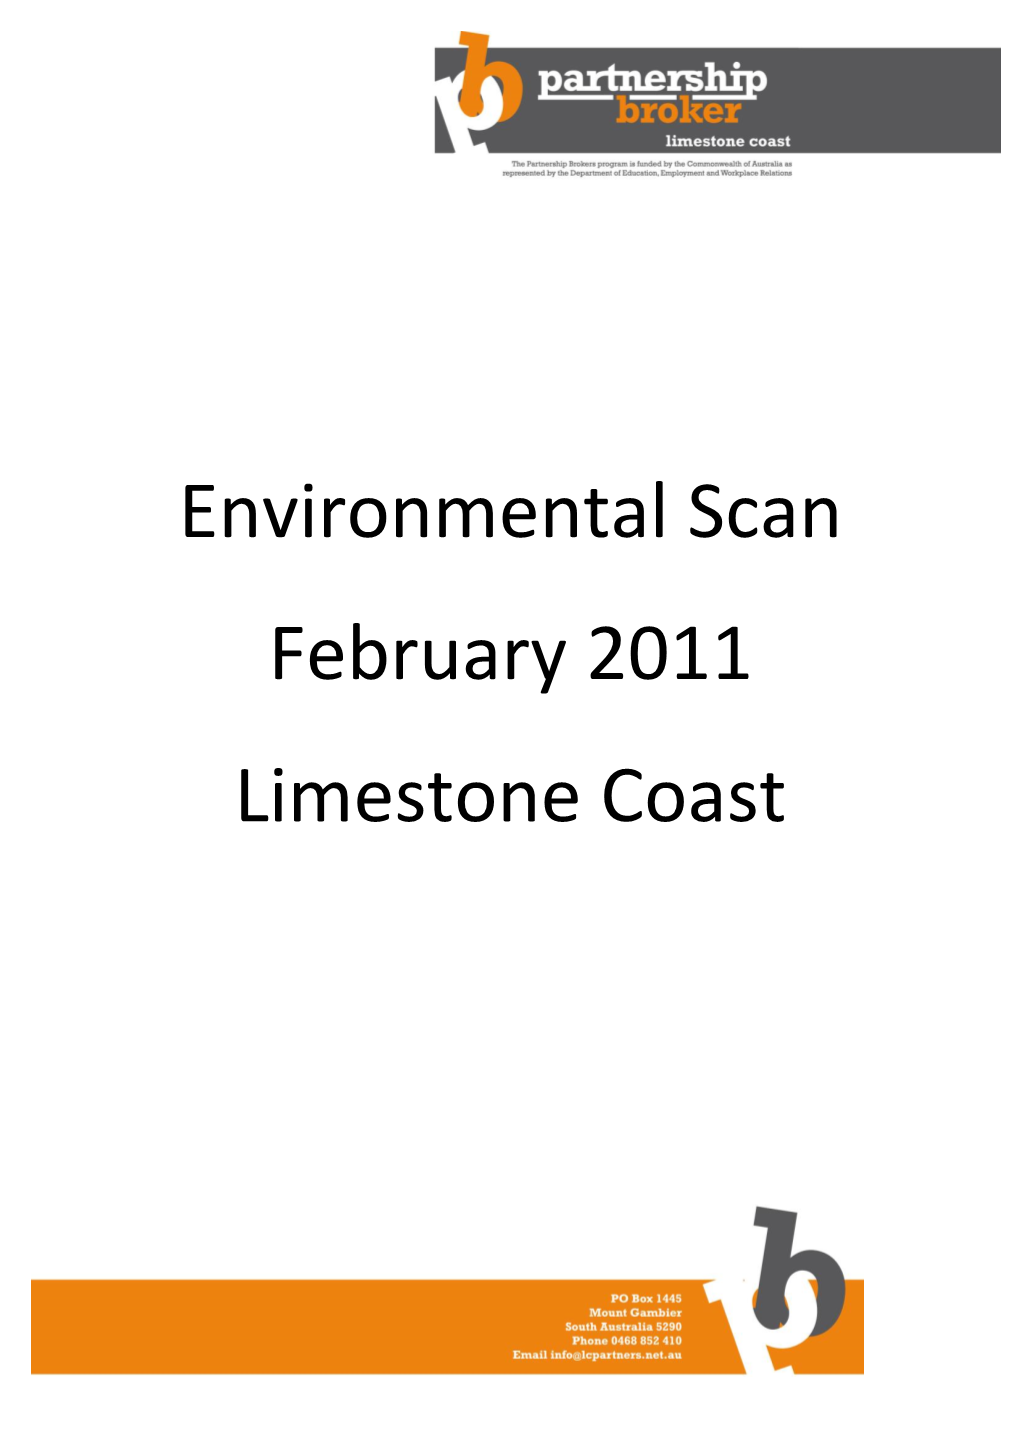 Environmental Scan February 2011 Limestone Coast